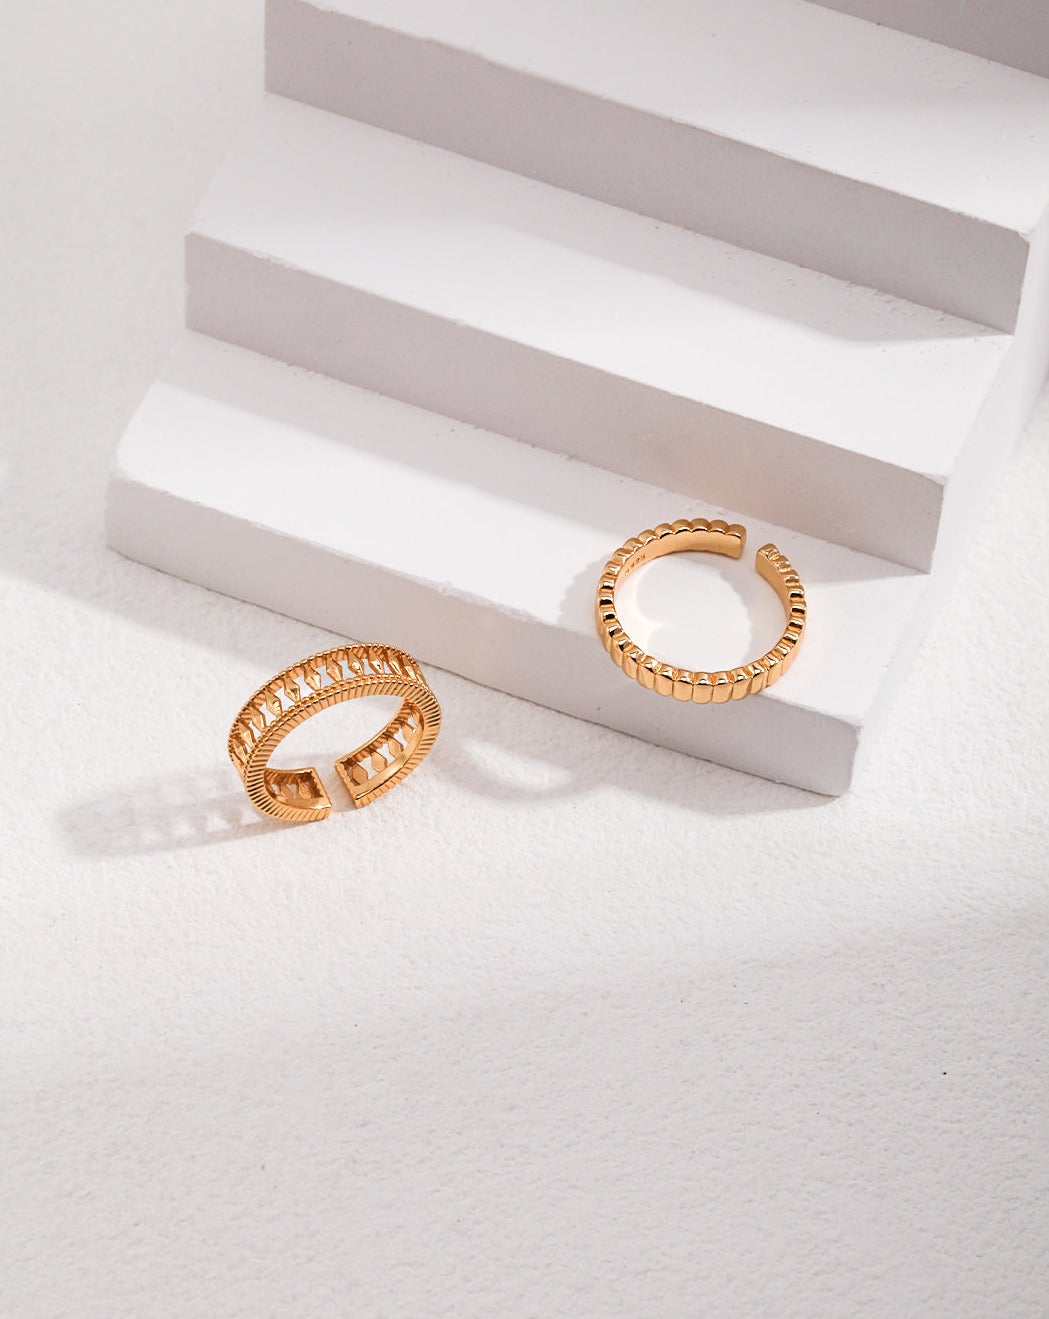 fashion-jewelry-minimalist-jewelry-design-jewelry-set-necklace-pearl-earring-gold-coated-silver-bijoux-minimalist-bracelets-ring-retro-gold